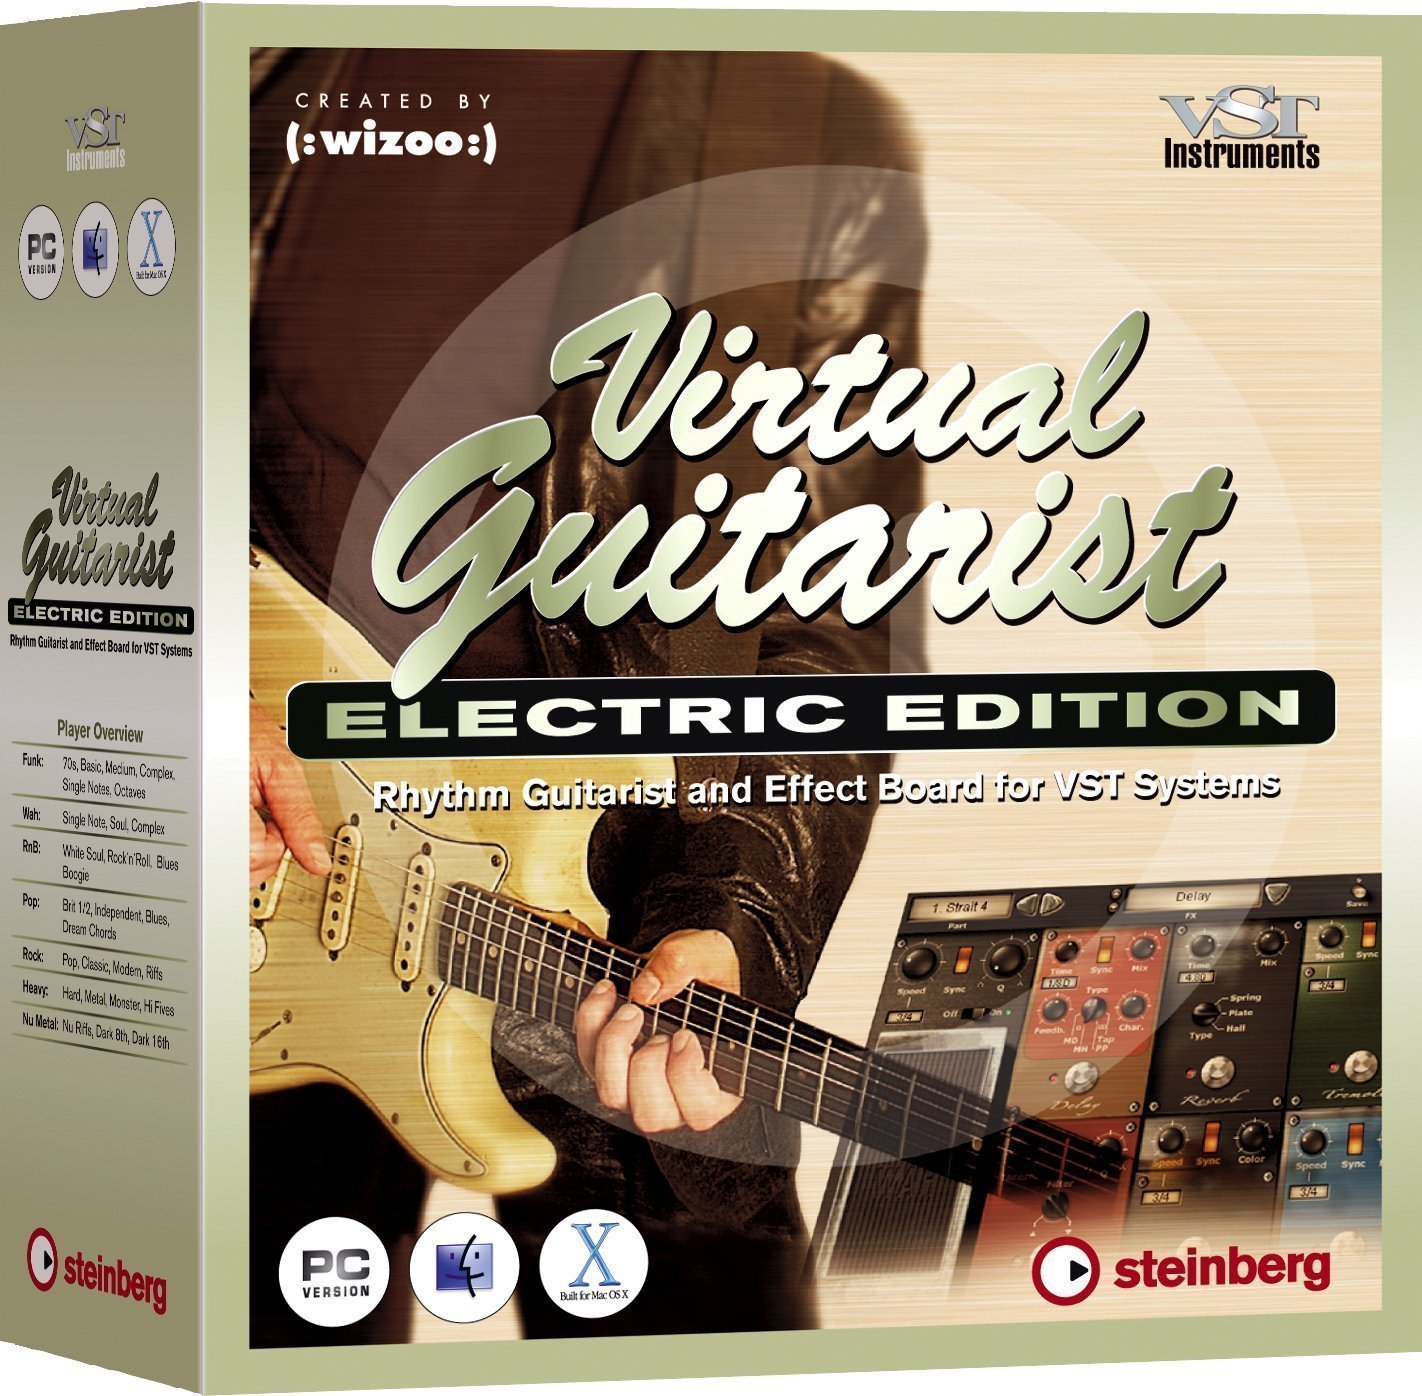 Studio-programvara Steinberg Virtual Guitarist Electric Edition